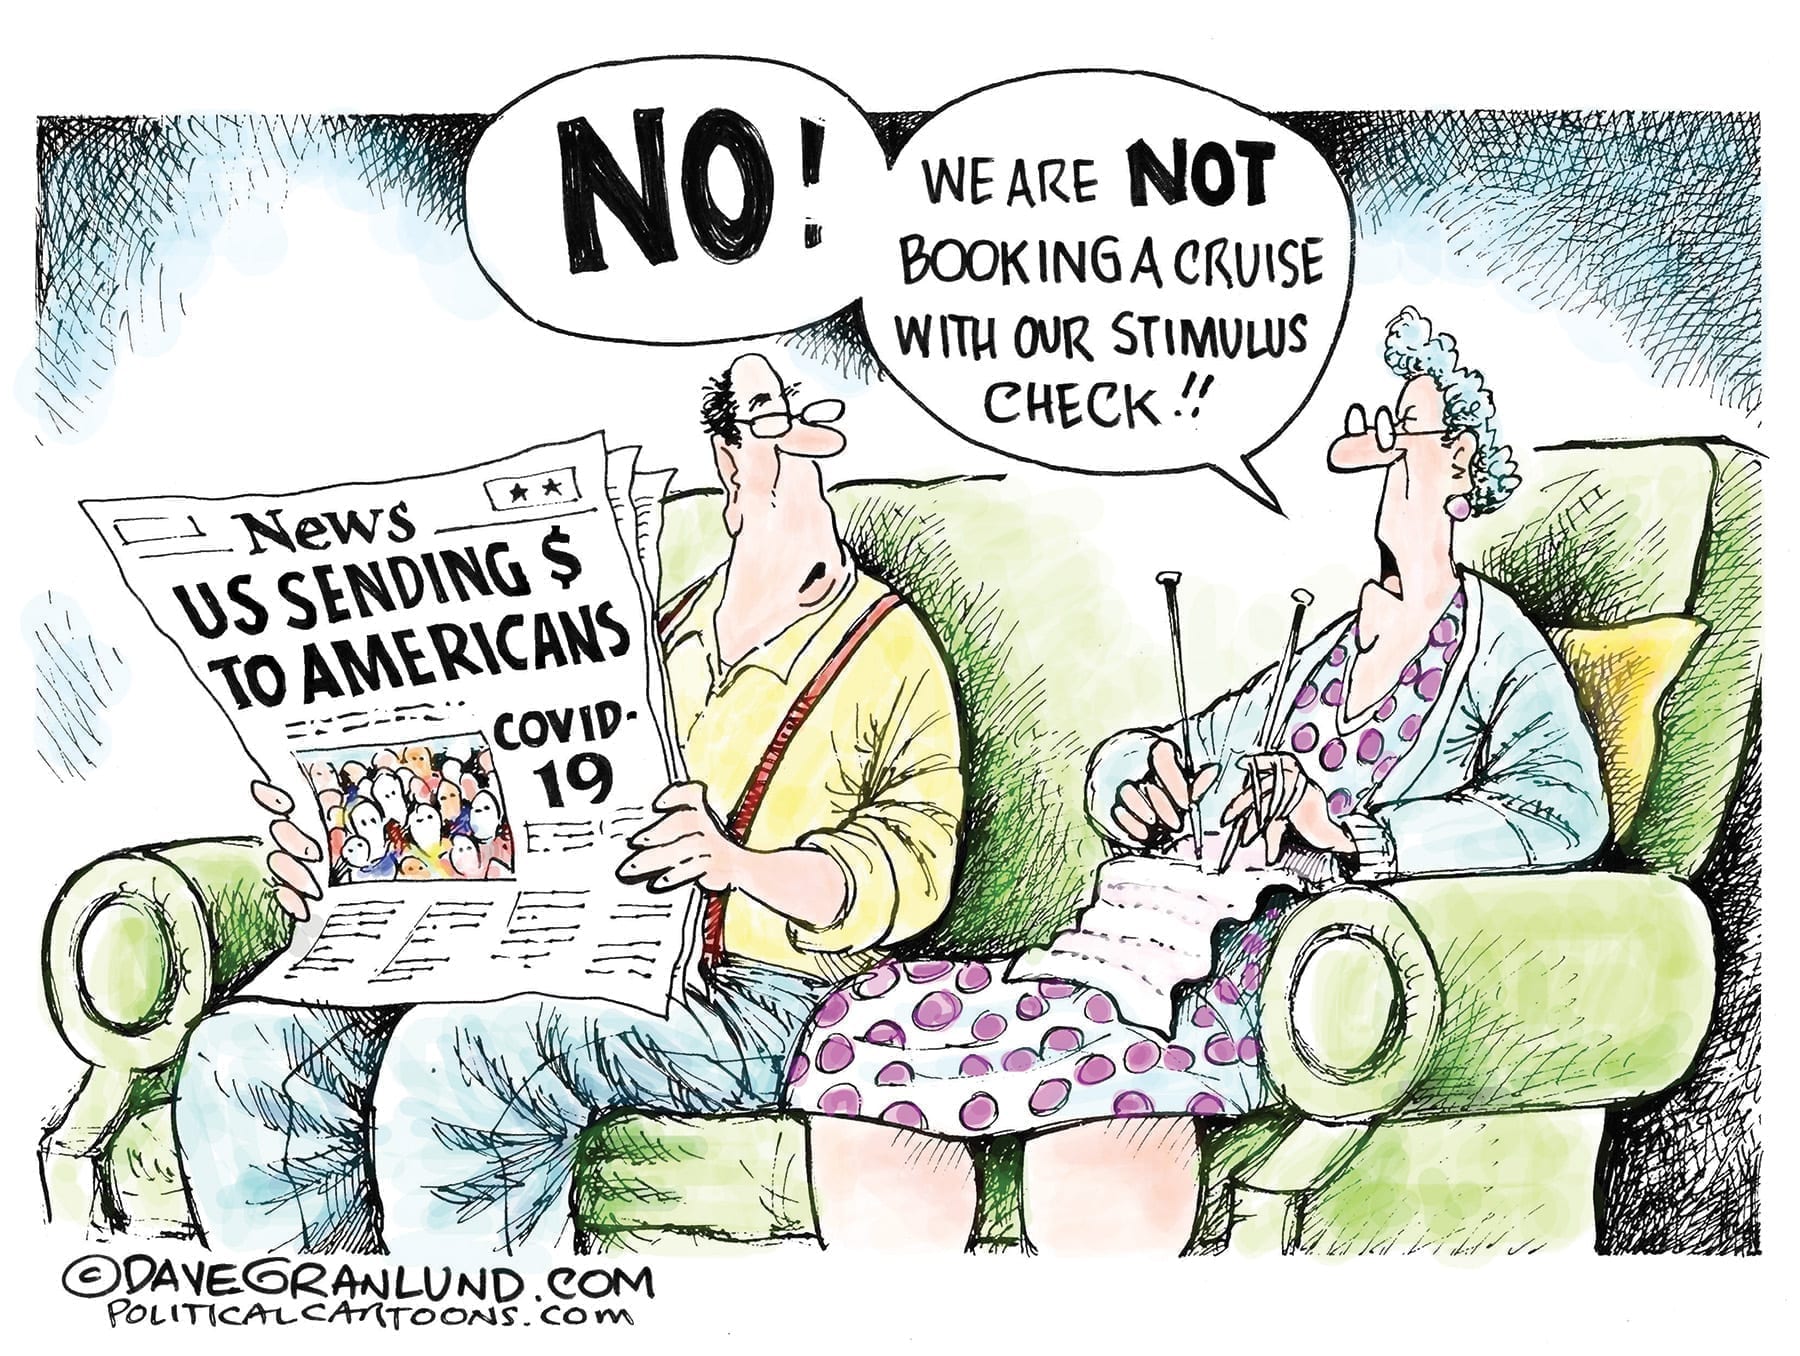 Stimulus checks to Americans